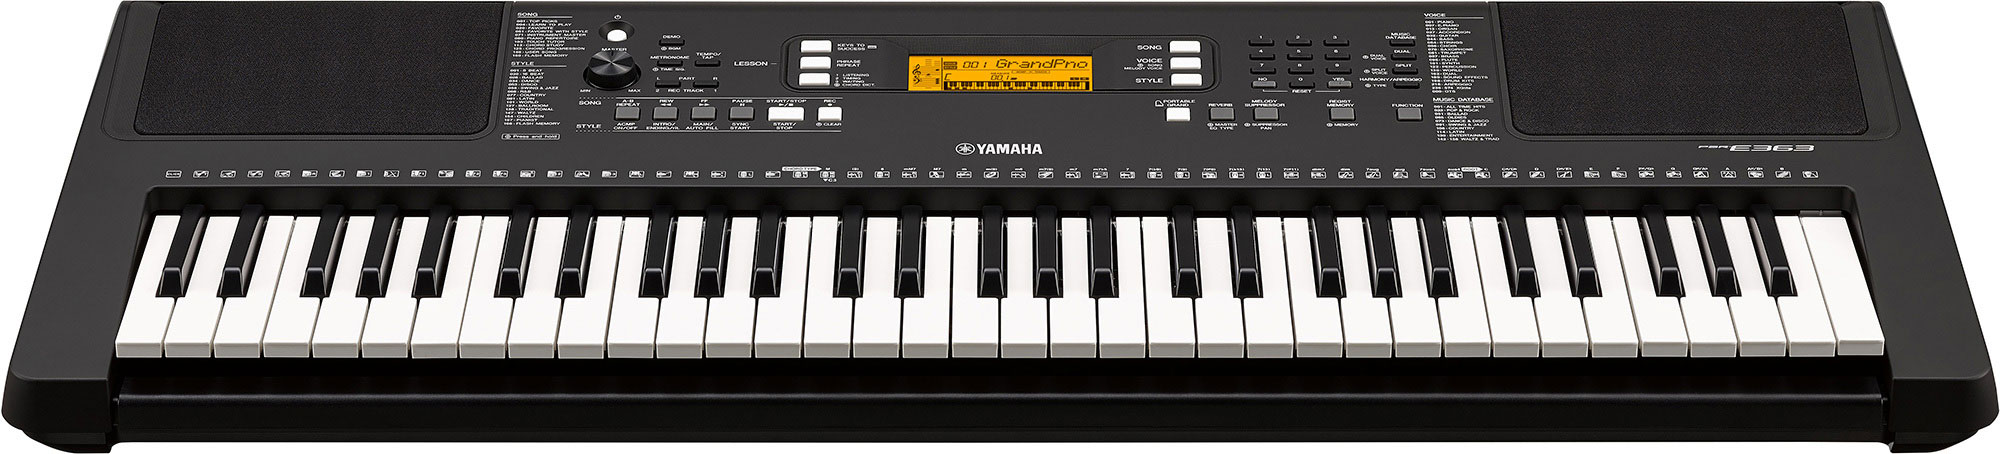 Yamaha Psr-e363 - - Entertainer Keyboard - Variation 1